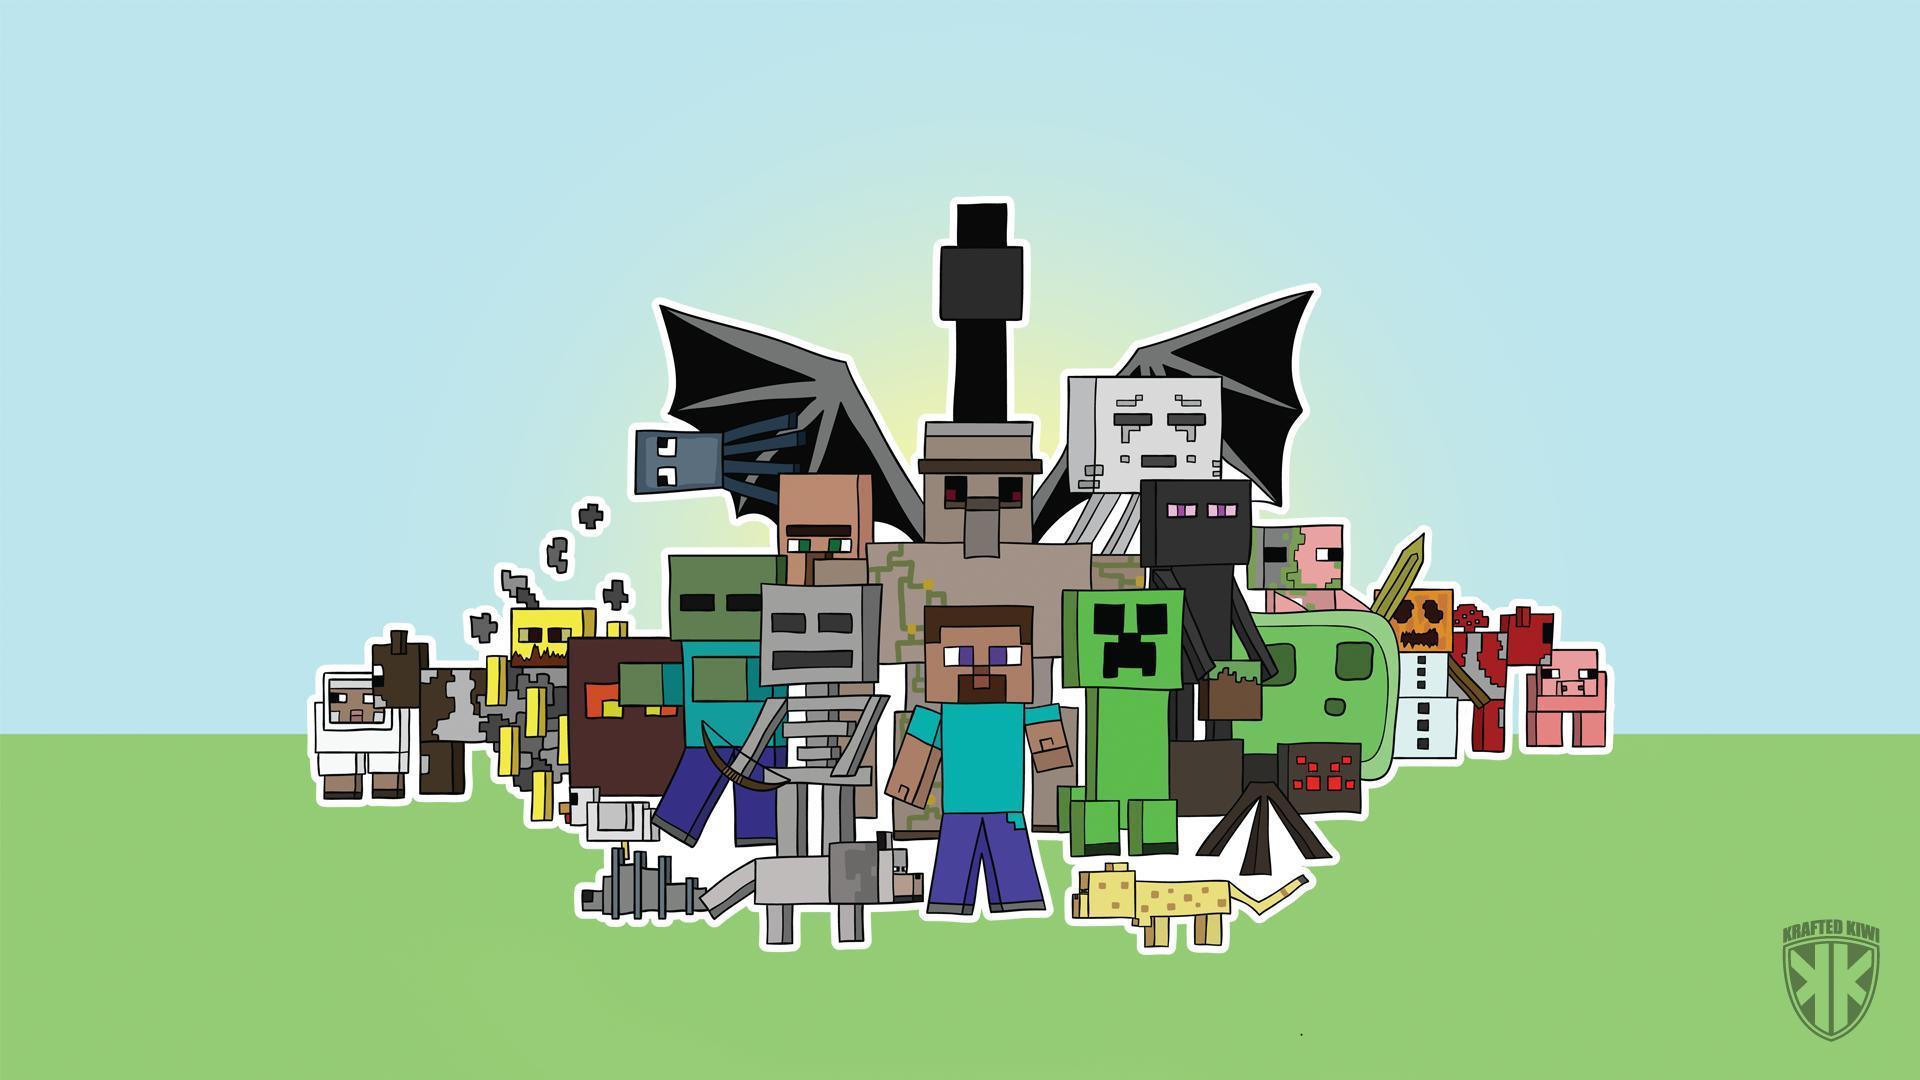 Minecraft Background Maker. Wallpaper, Background, Image, Art